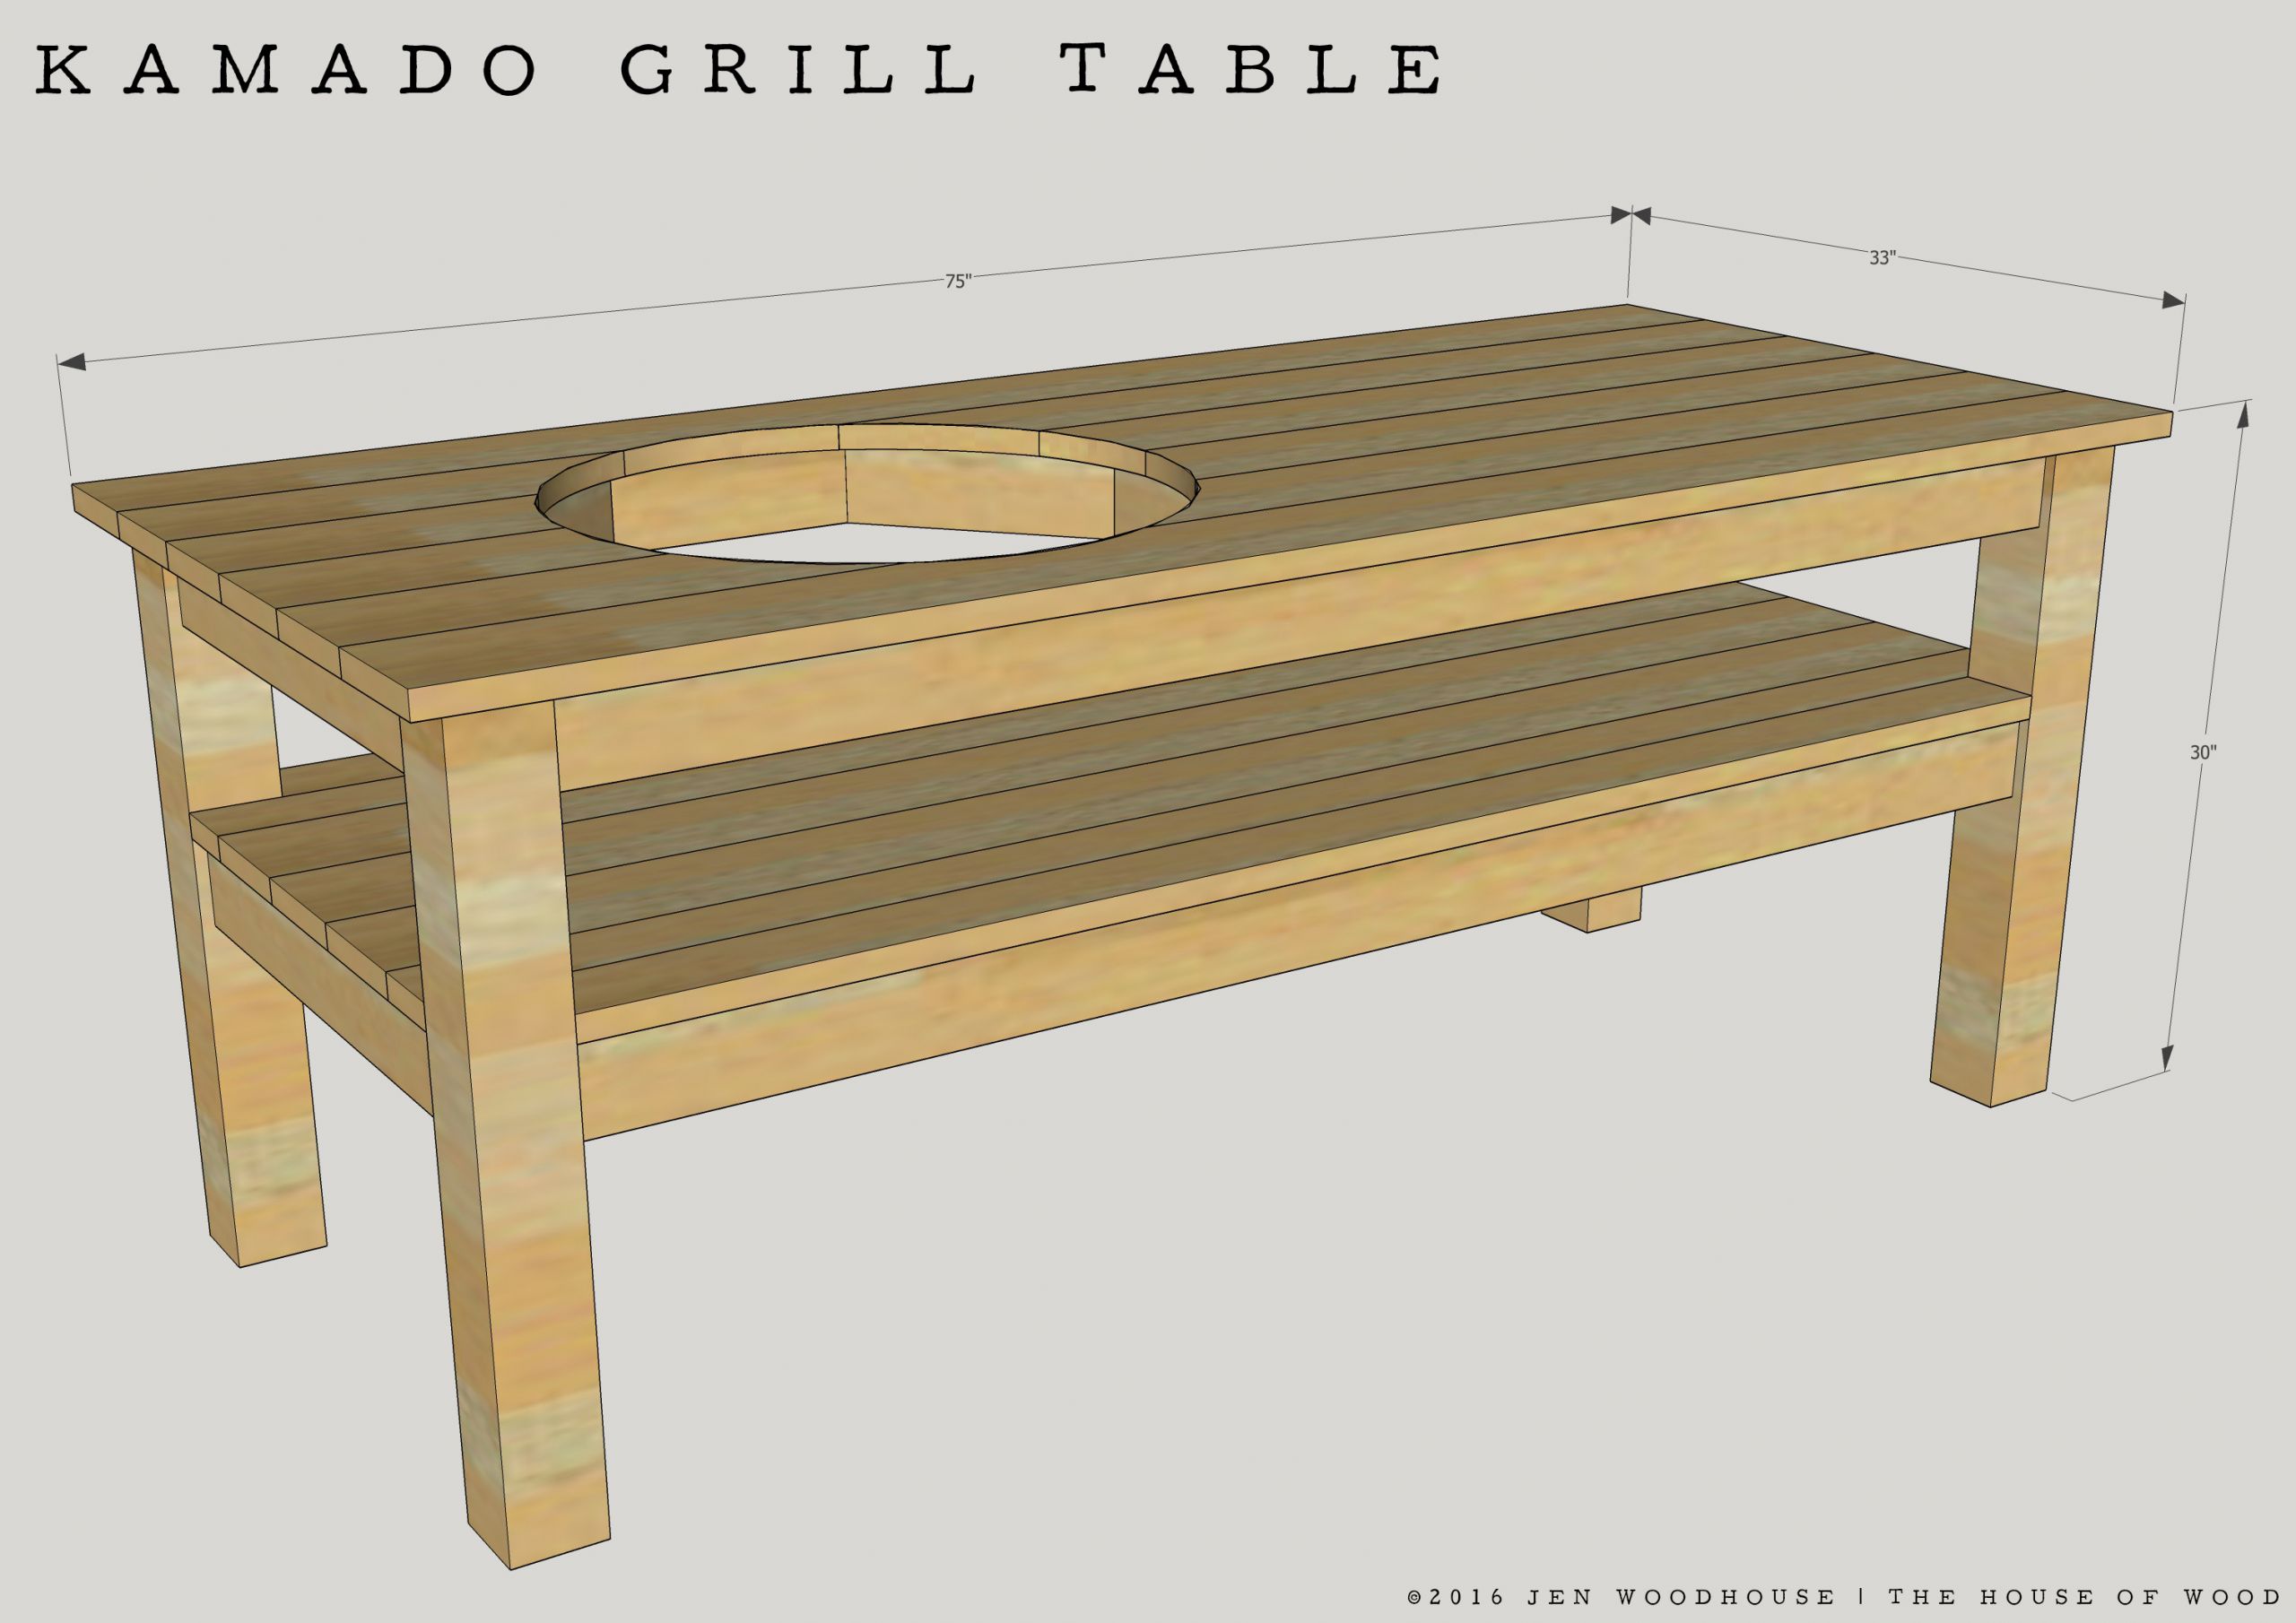 DIY Grill Table Plans
 DIY Kamado Grill Table